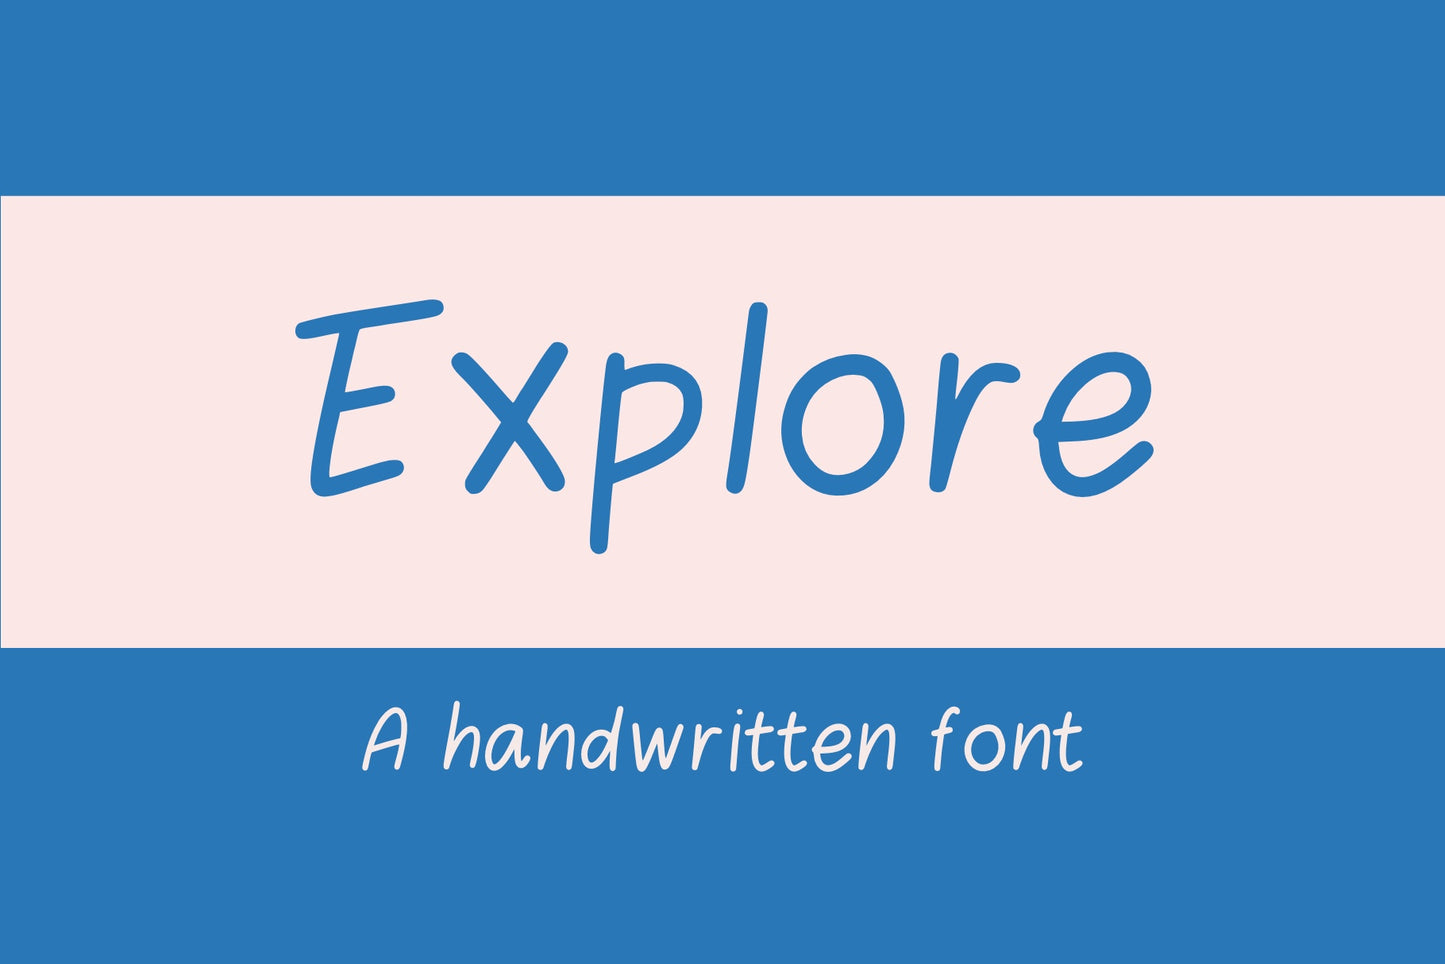 Handwritten Font - Explore